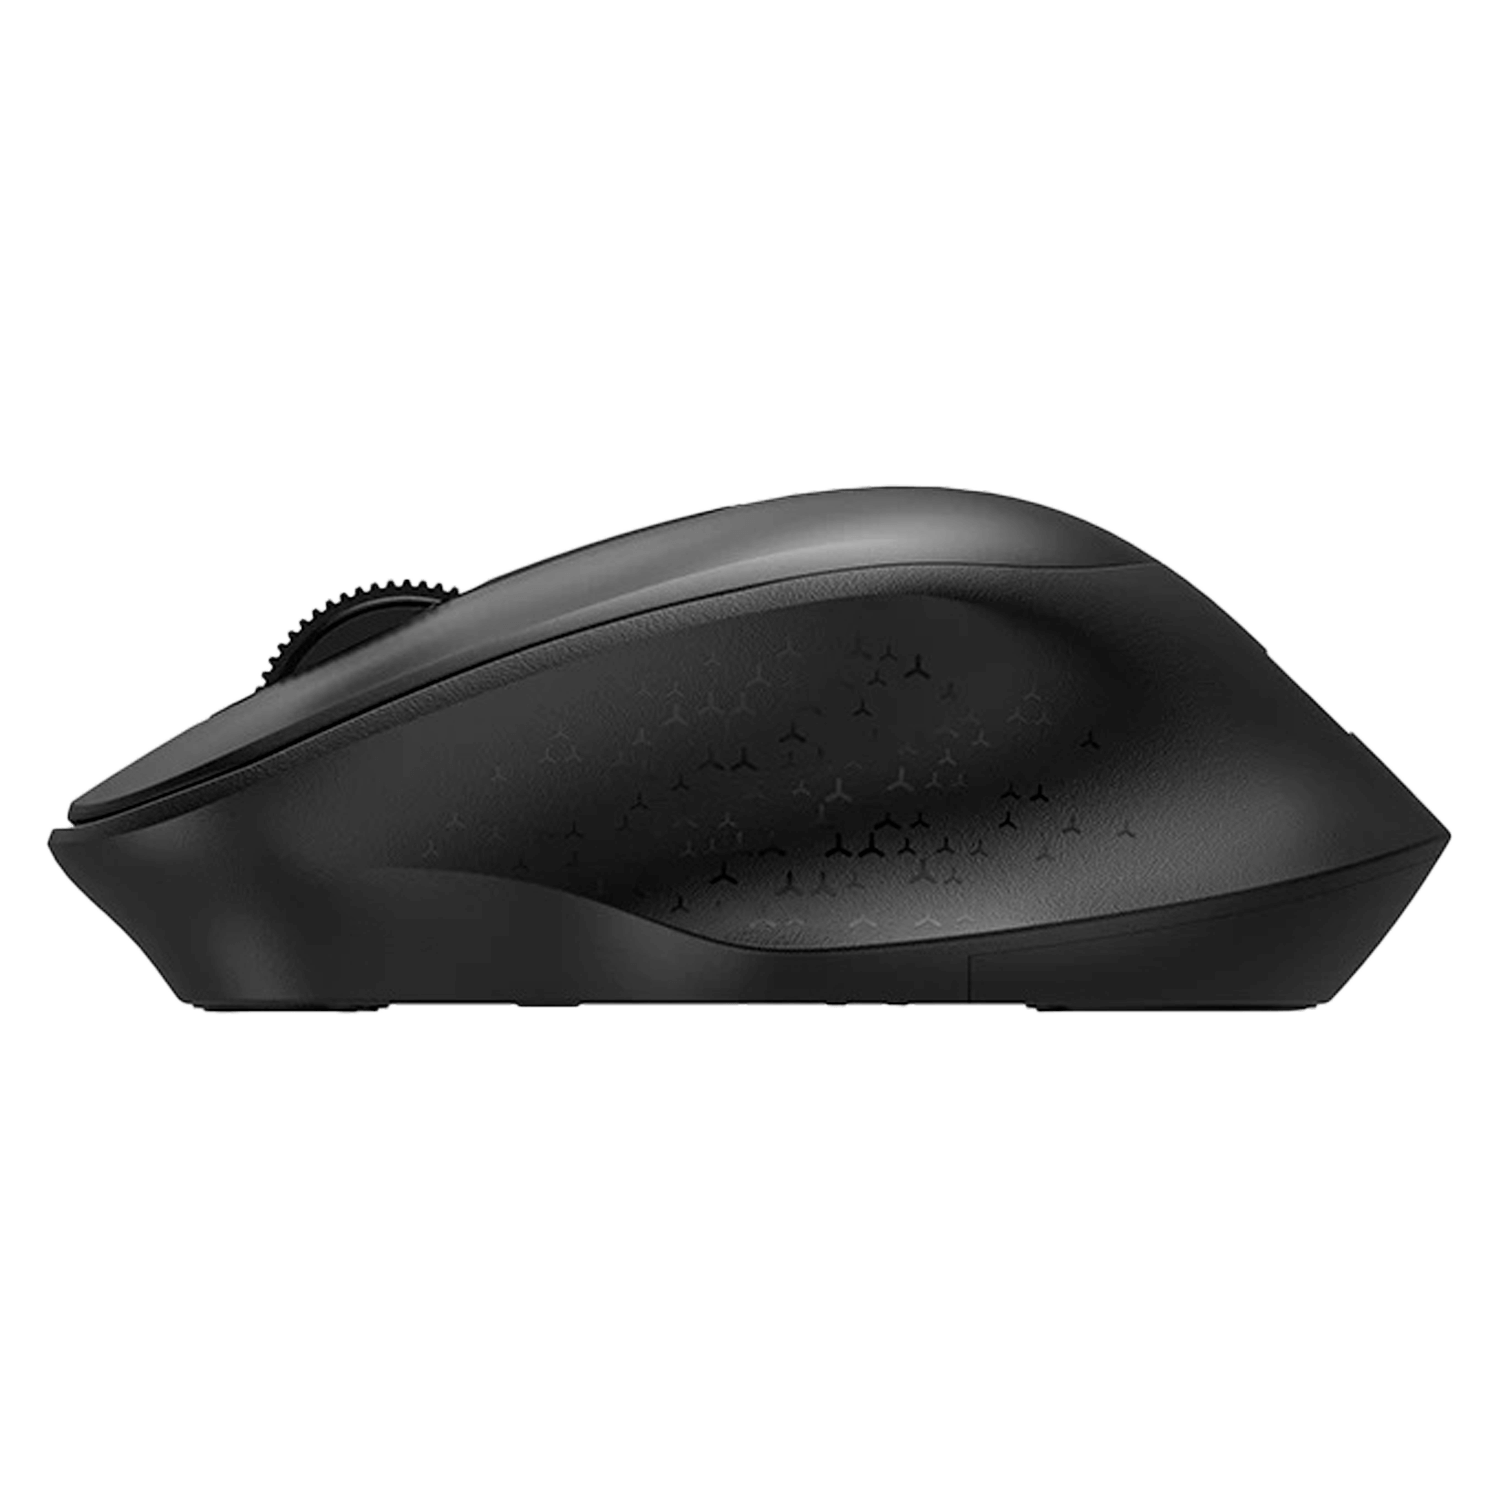 Mouse Aigo M32 Wireless - Preto 
